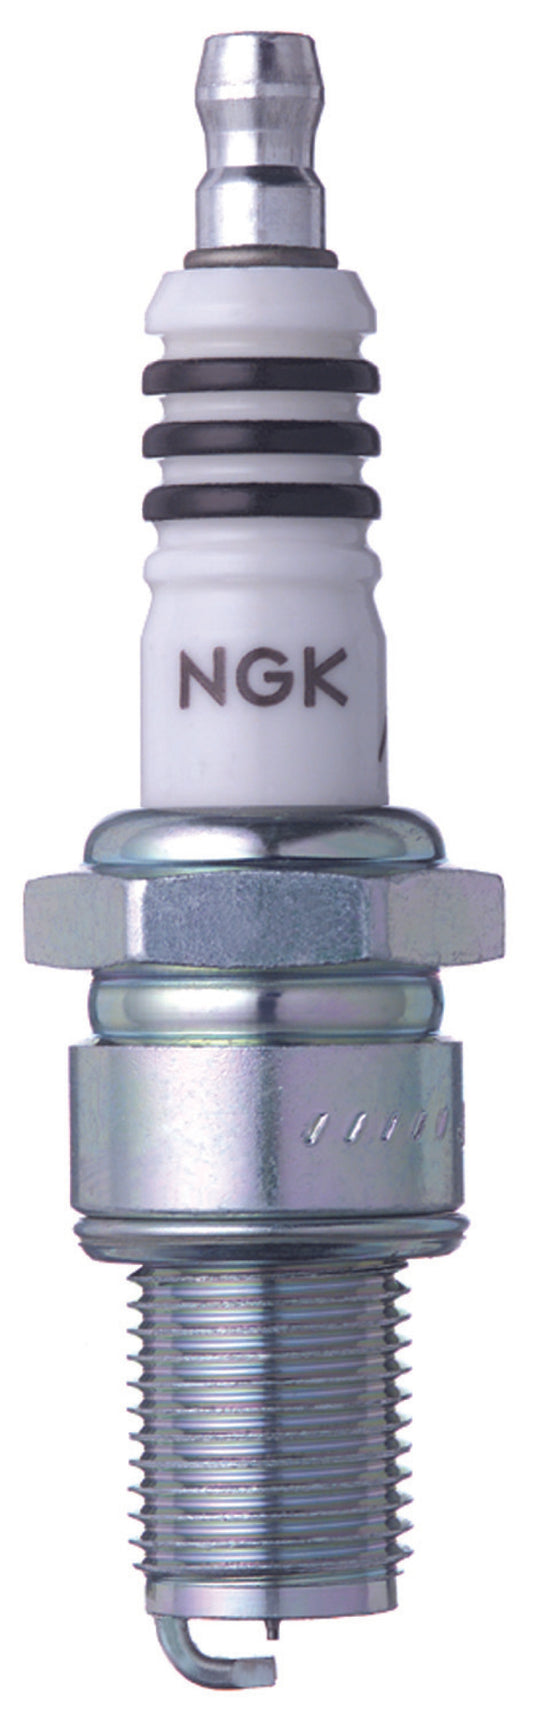 NGK Iridium IX Spark Plug Box of 4 (BR7EIX)